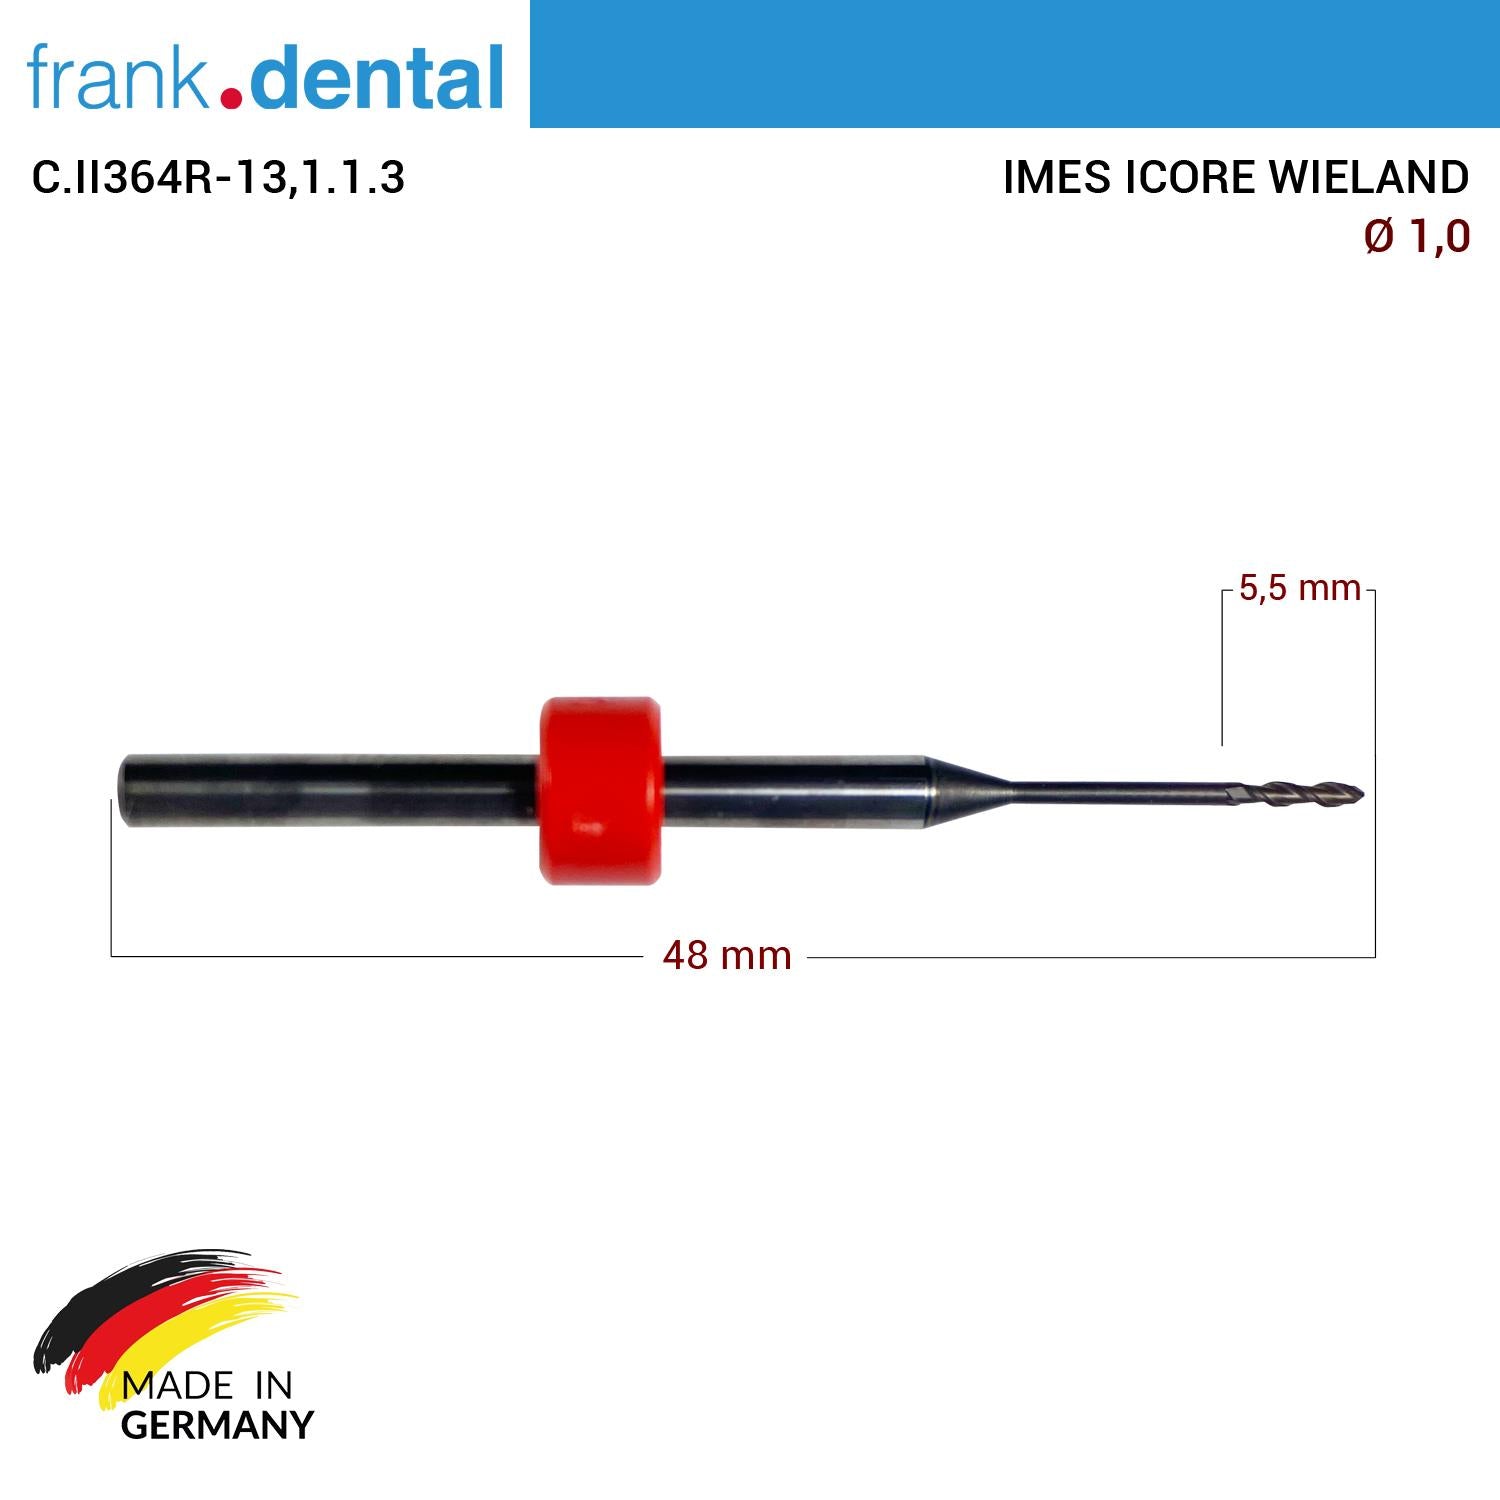 DentrealStore - Frank Dental Imes Icore Wieland Cad Cam Drill 1.0 mm